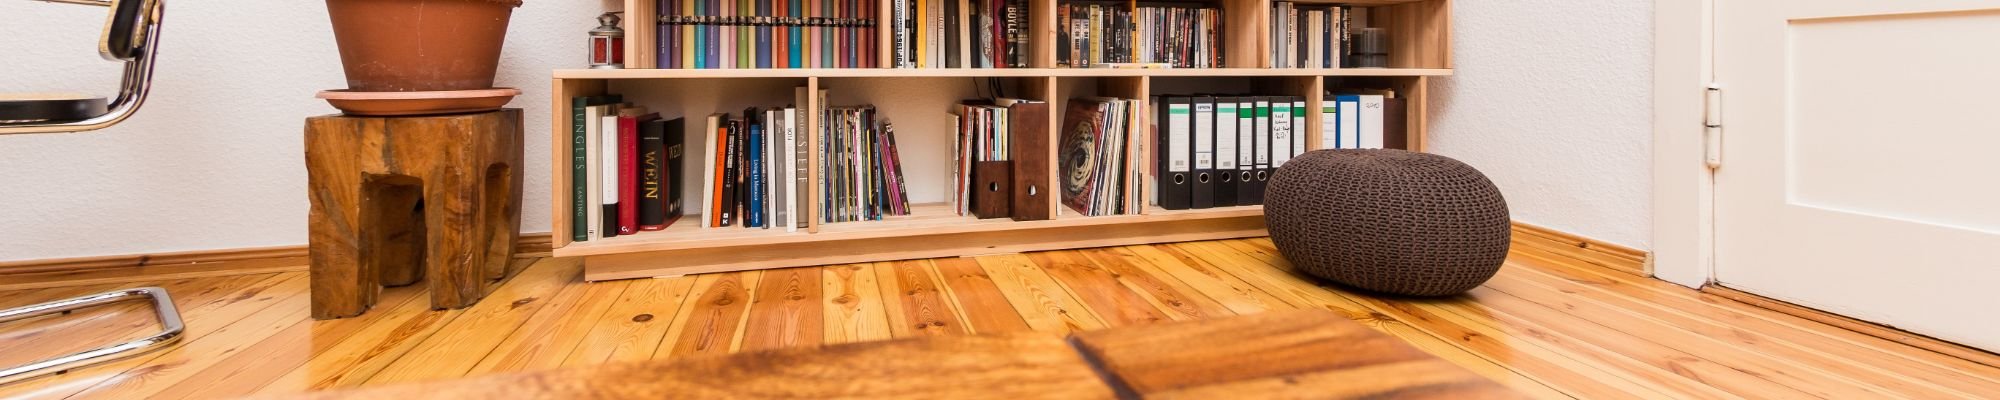 hardwoord floor in living room with bookcase